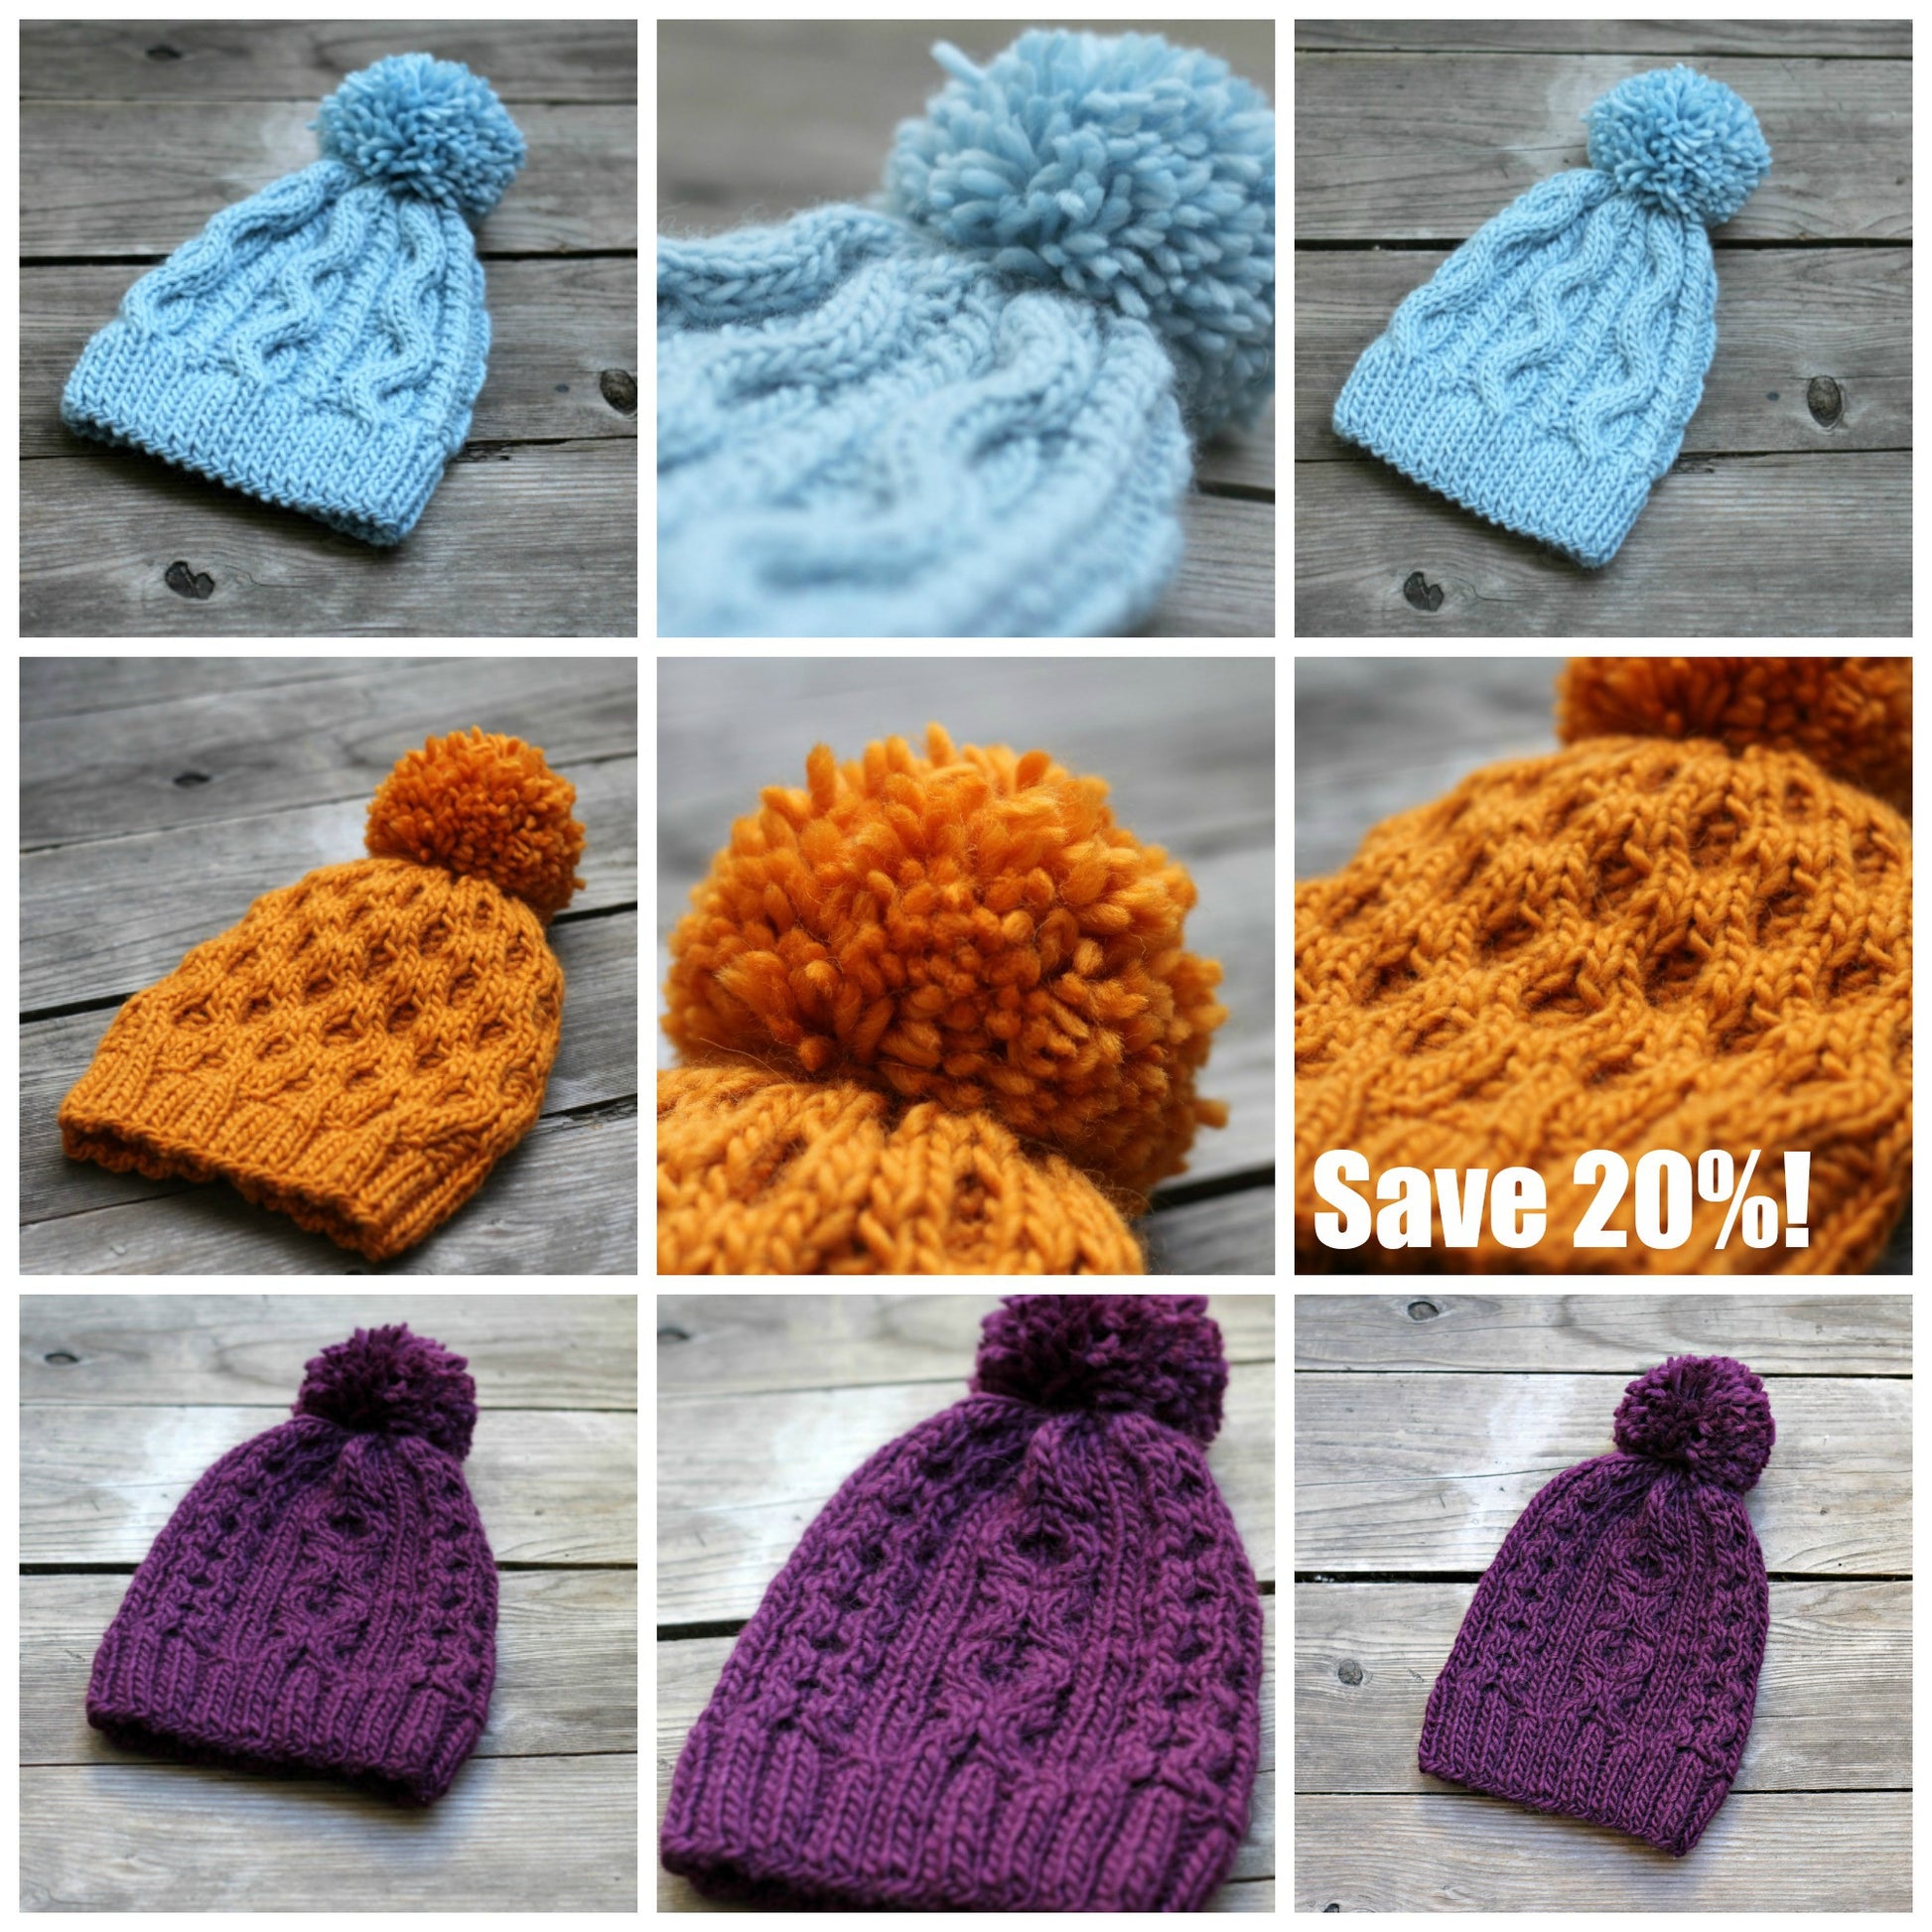 Knitting patterns - 3 knitted hat patterns bundle